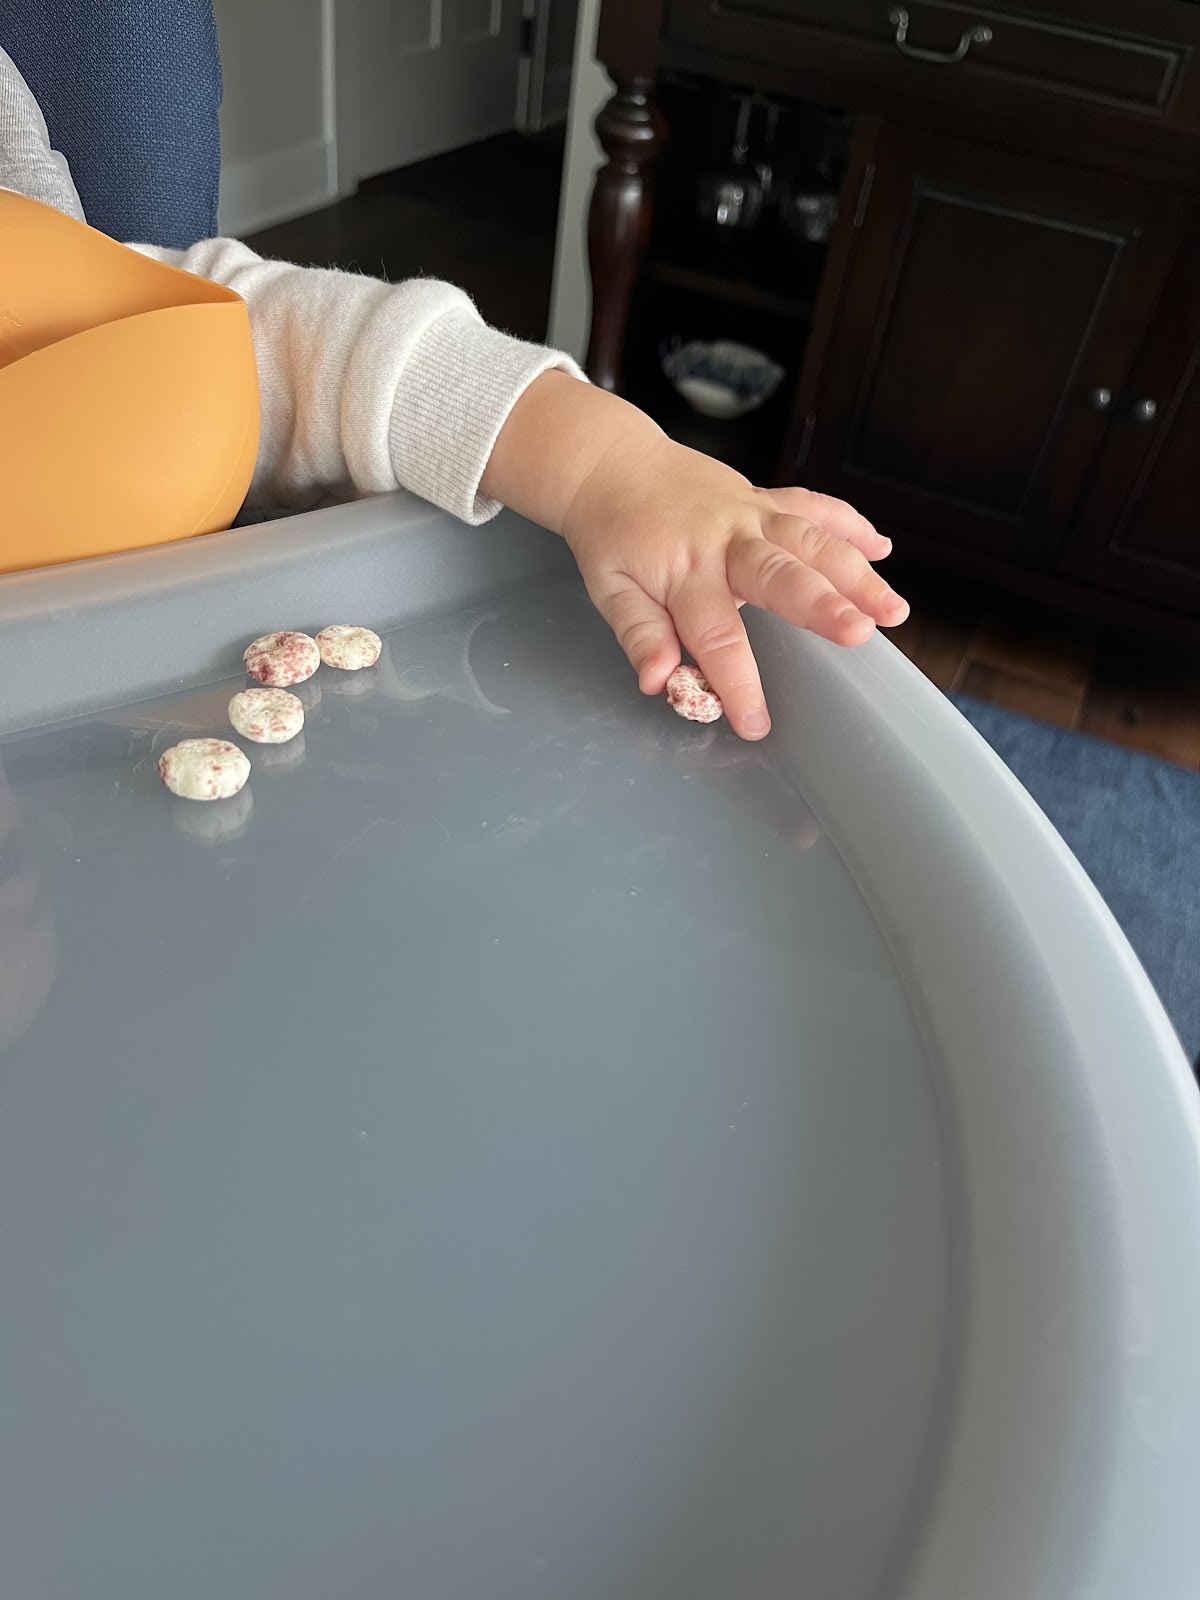 grasp developmental milestone in 7-month-old